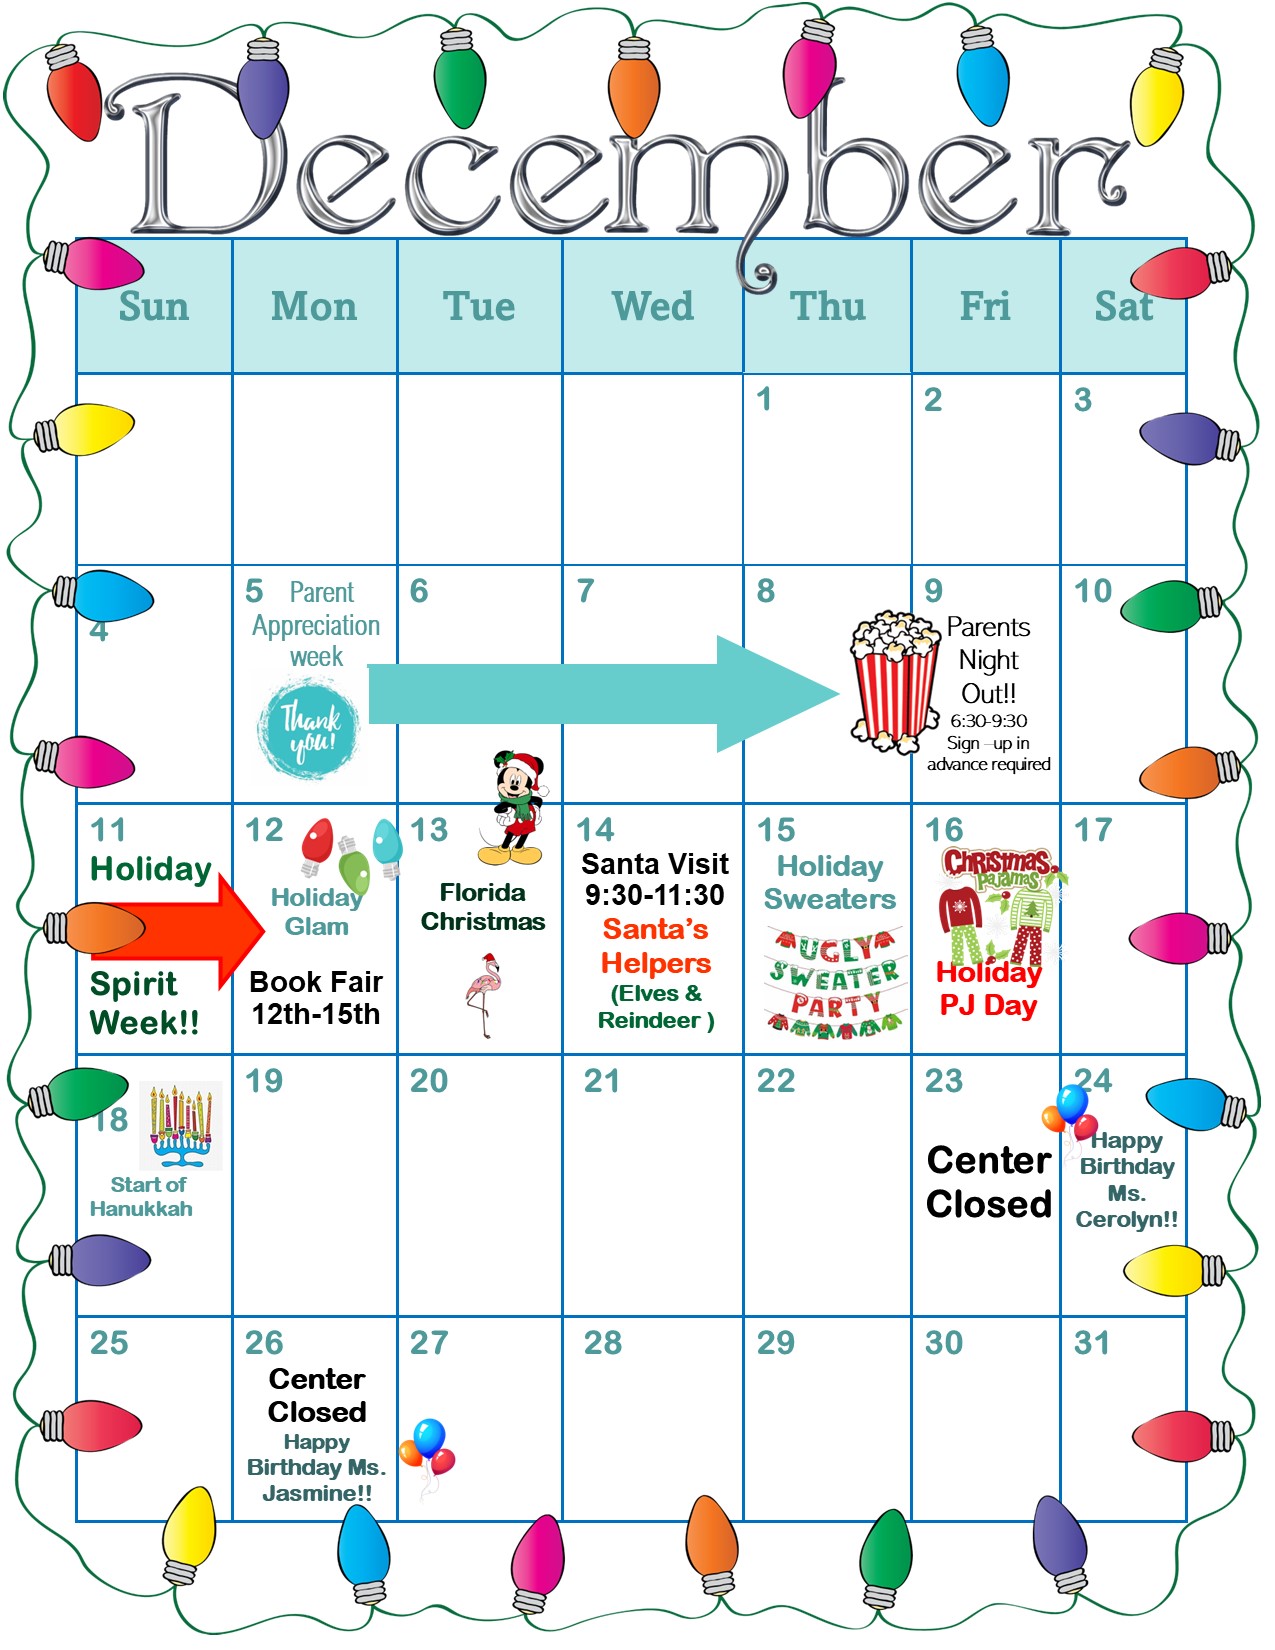 Calendar & Lunch Menu Deerwood Academy